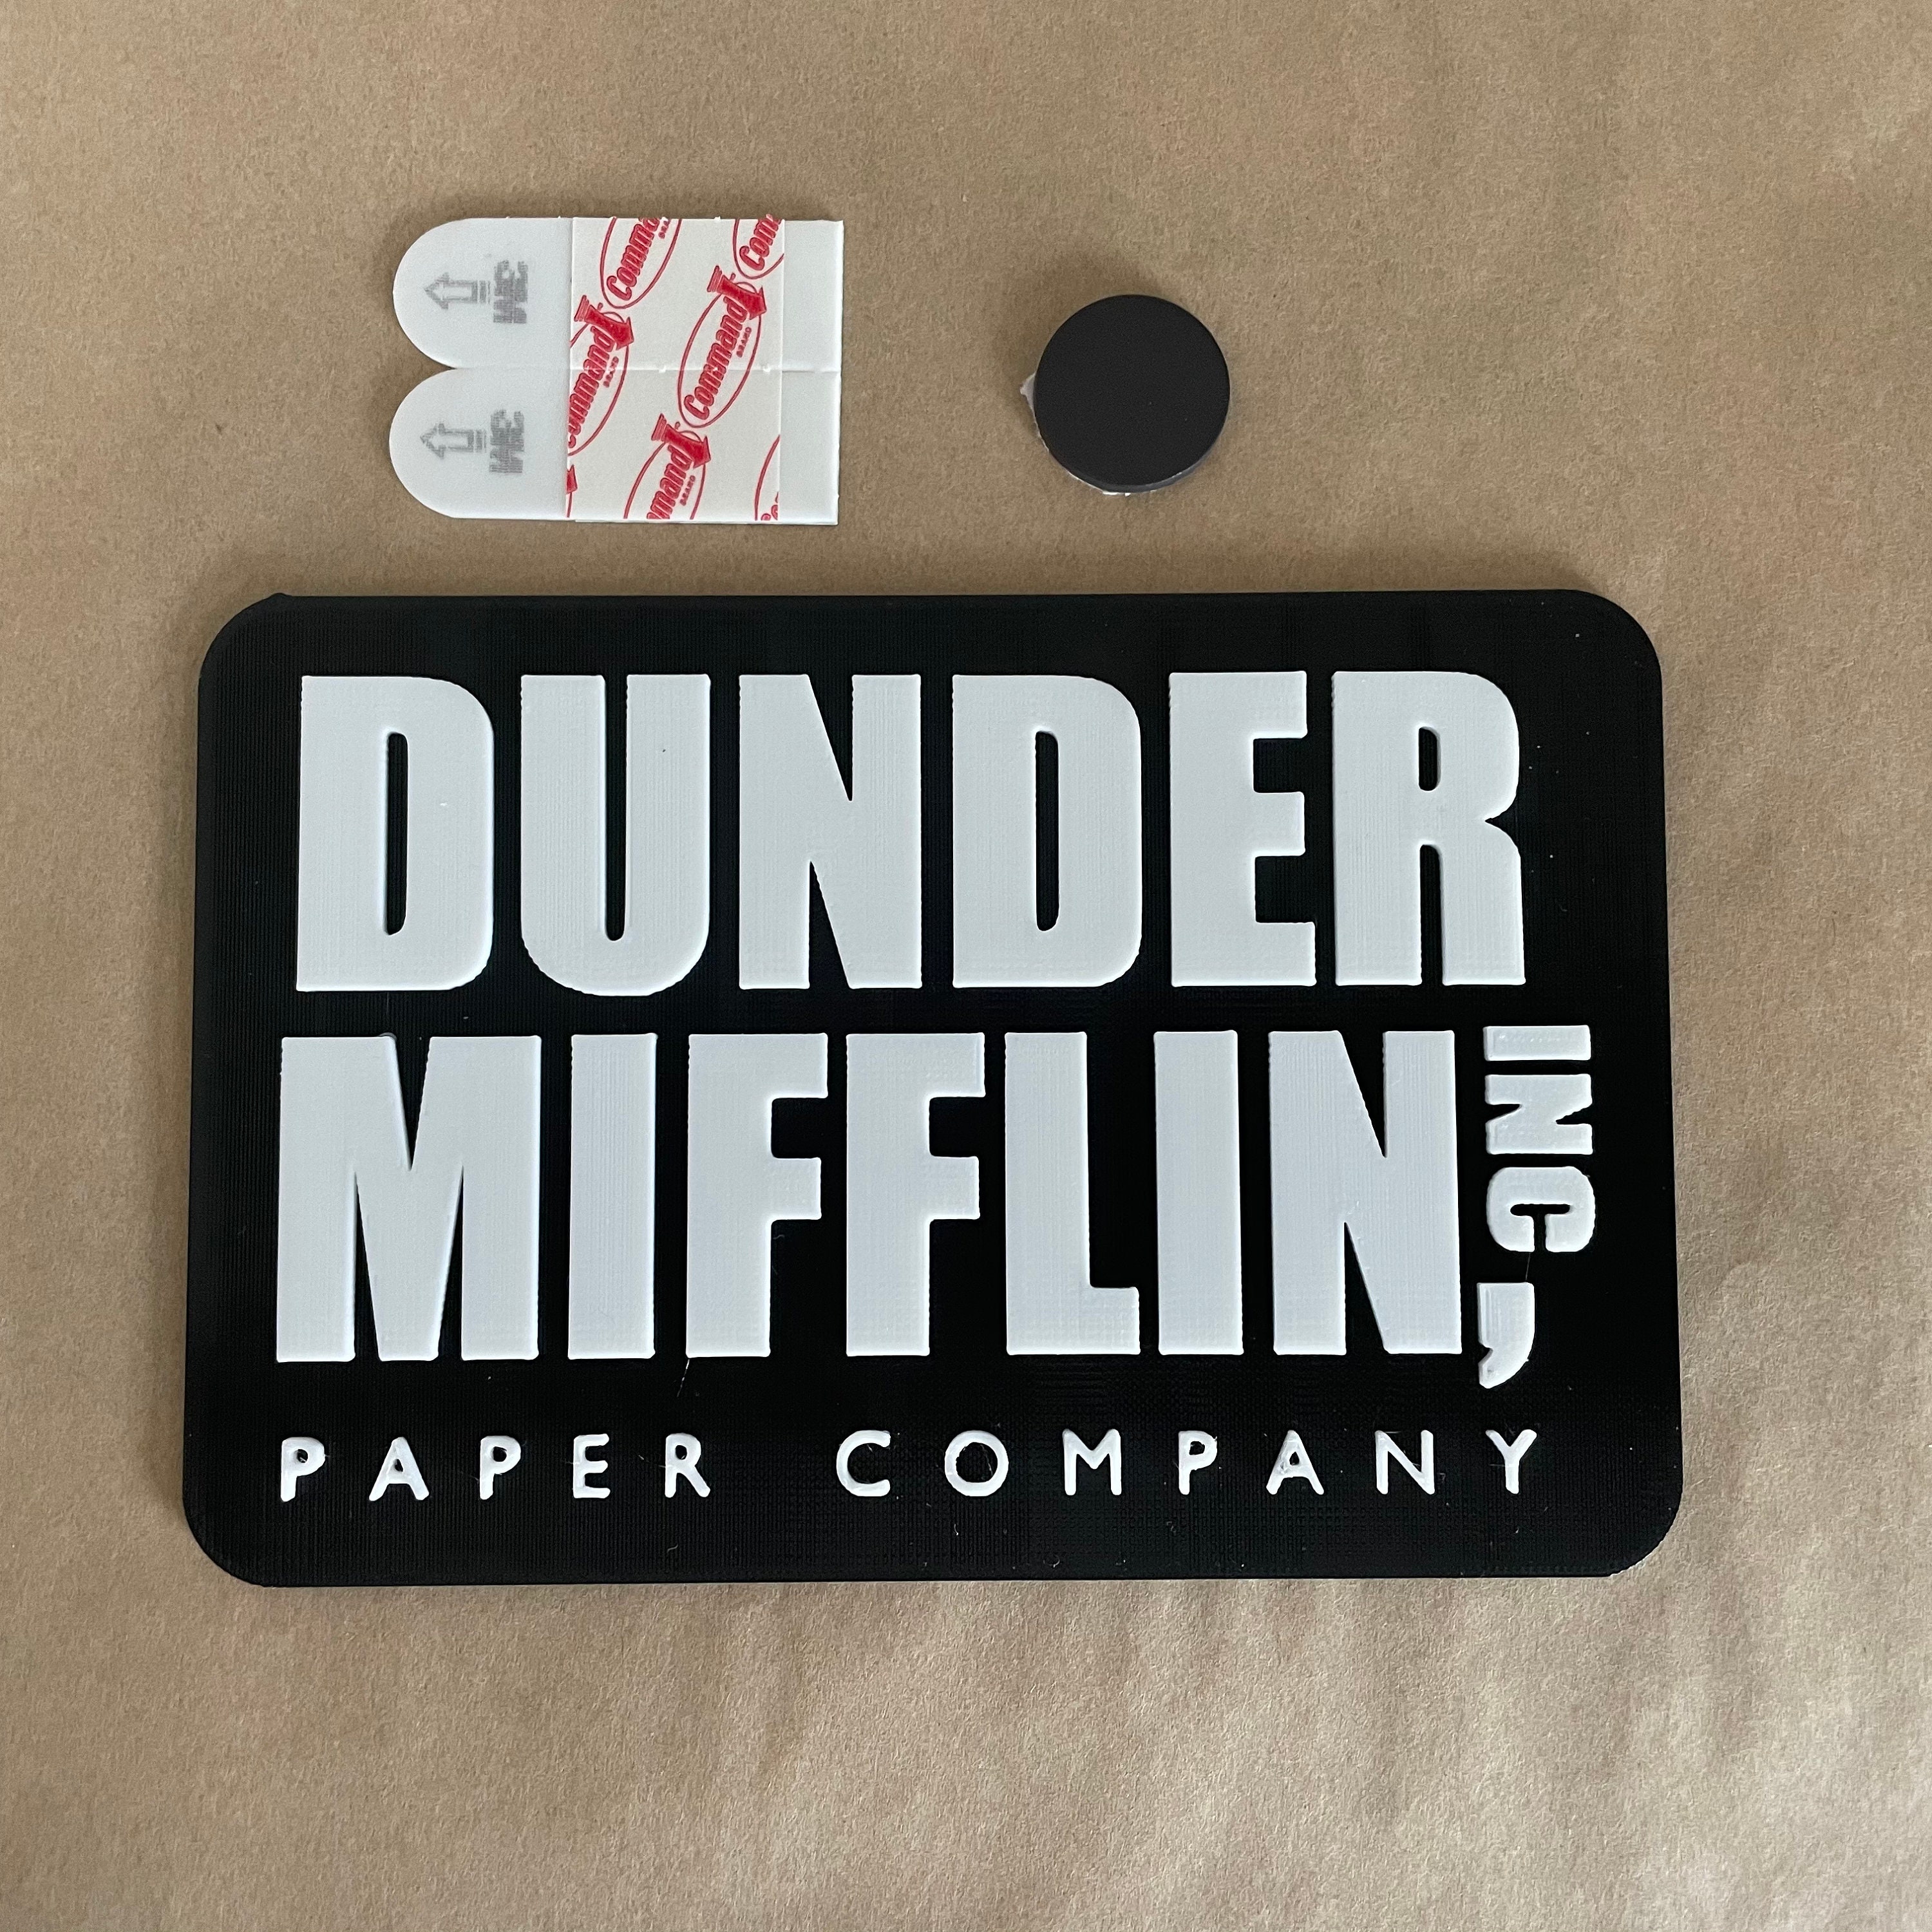 3D Printable Dunder Mifflin Logo by T-E-C